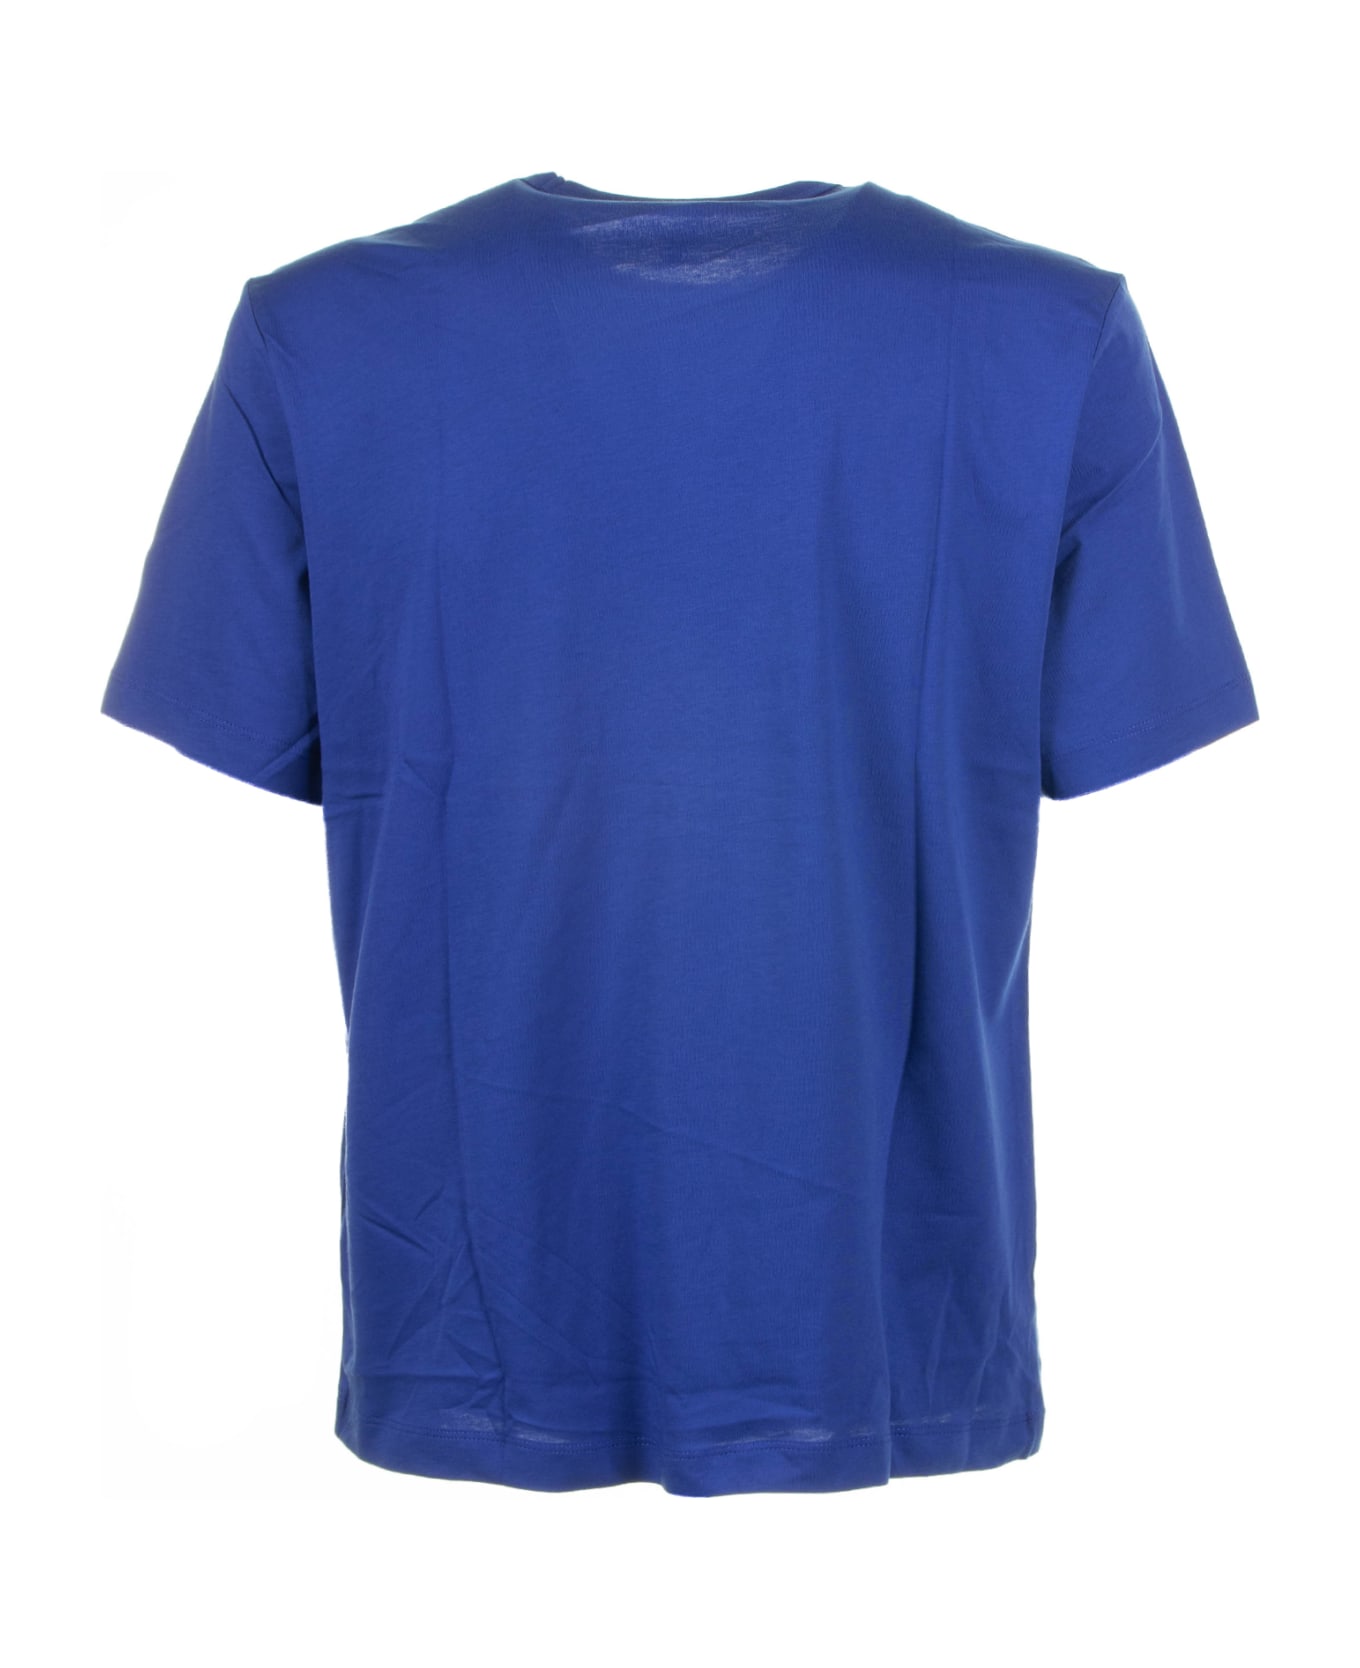 Blauer Blue Crew Neck T-shirt In Cotton - MOLTO BLU シャツ